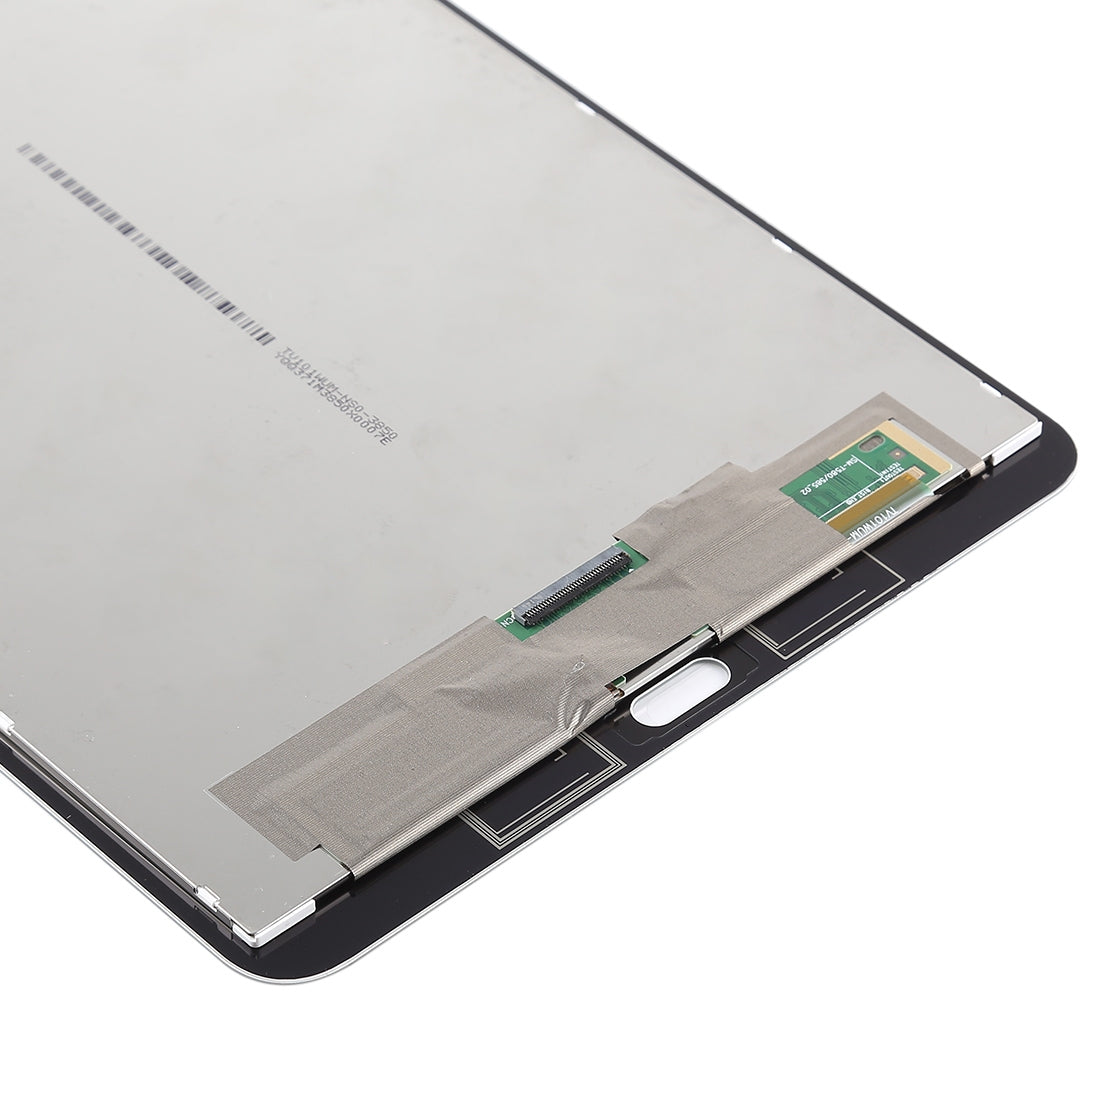 Pantalla LCD + Tactil Digitalizador Samsung Galaxy Tab A 10.1 T580